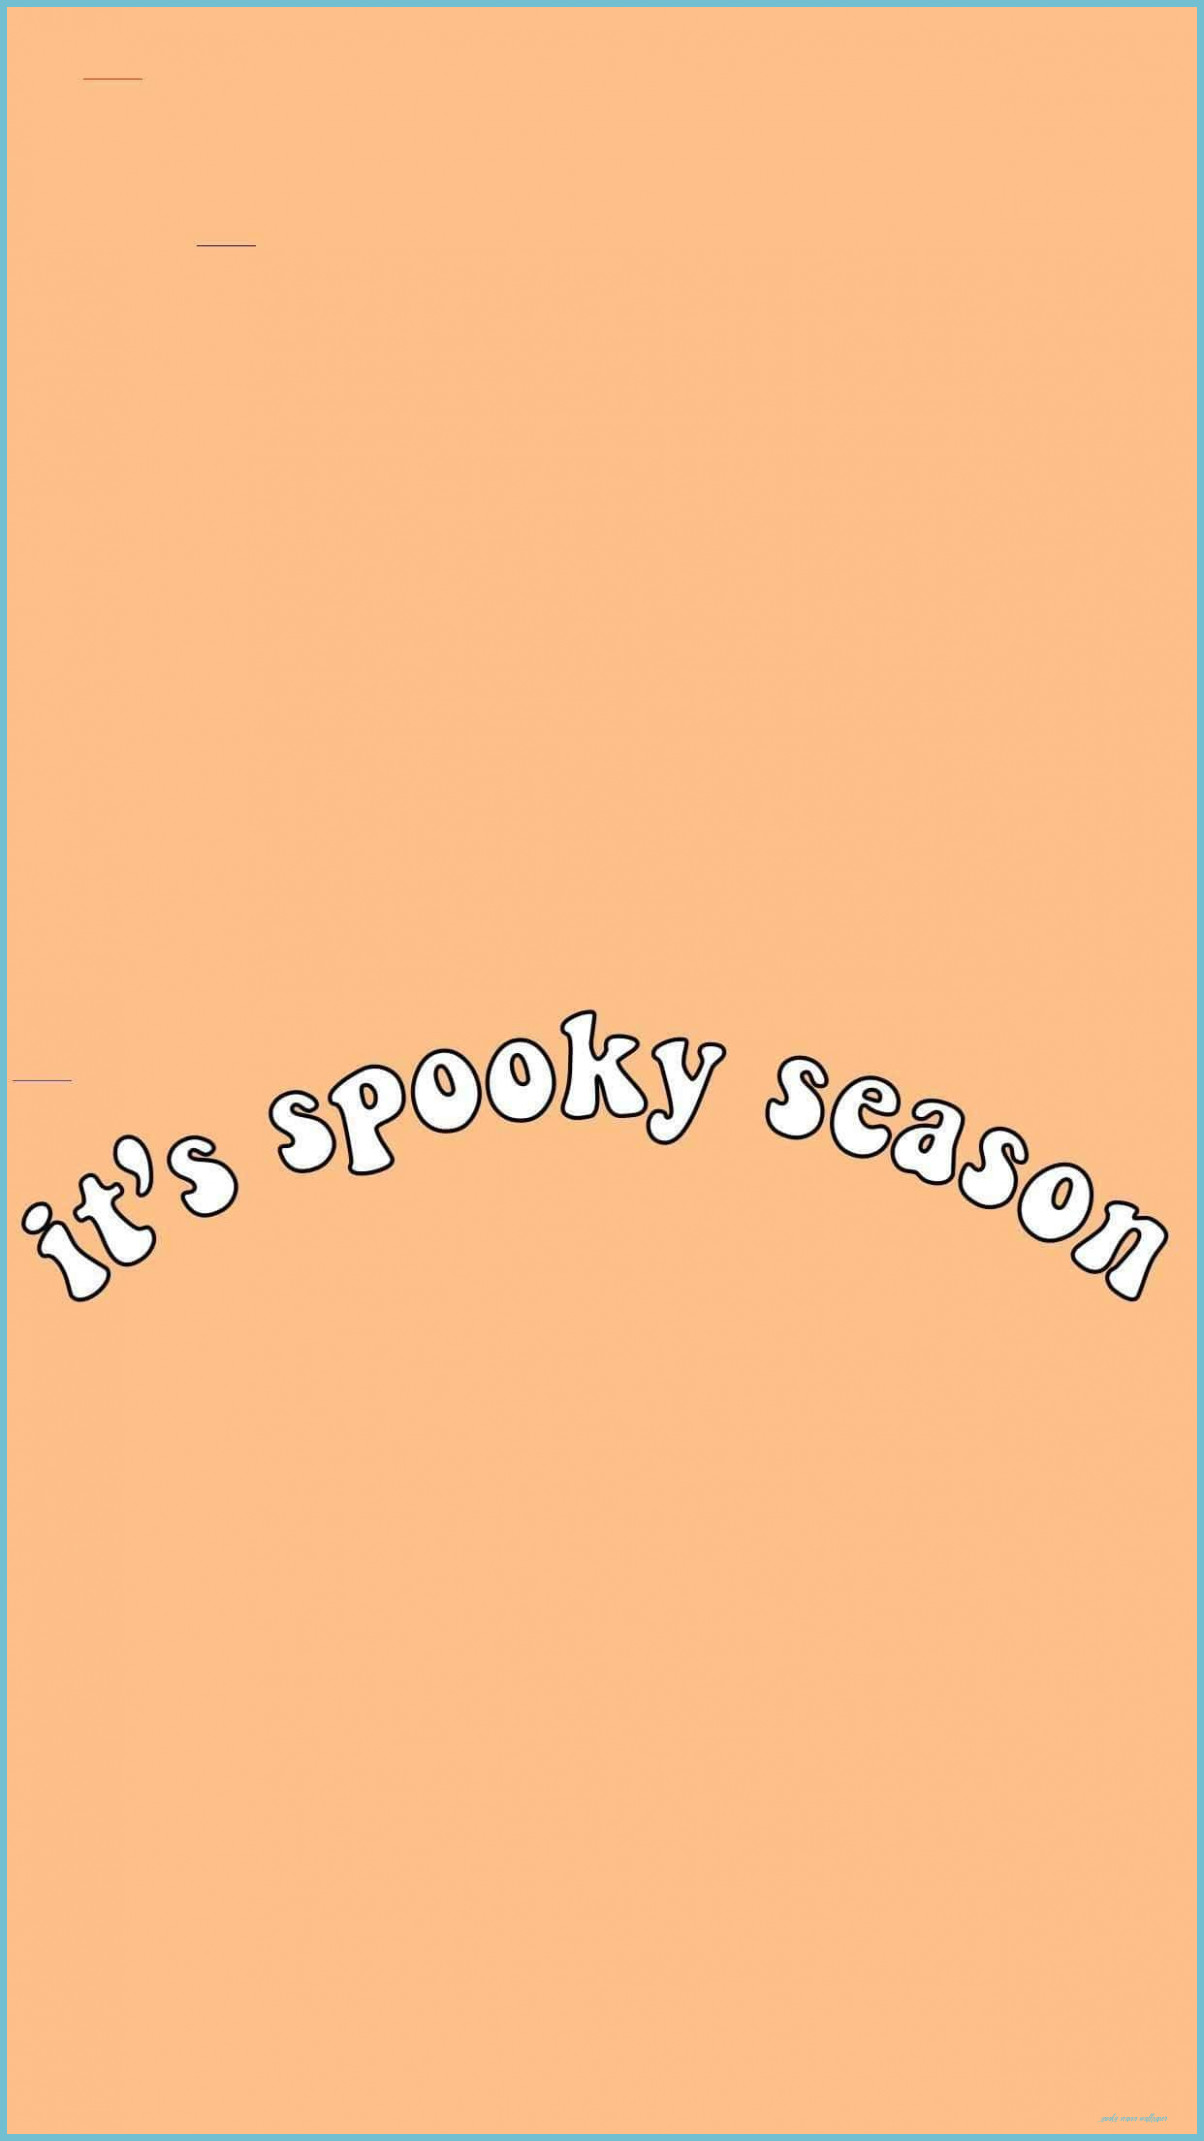 Spooky Season Wallpaper iPhone Free HD Wallpaper Season Wallpaper